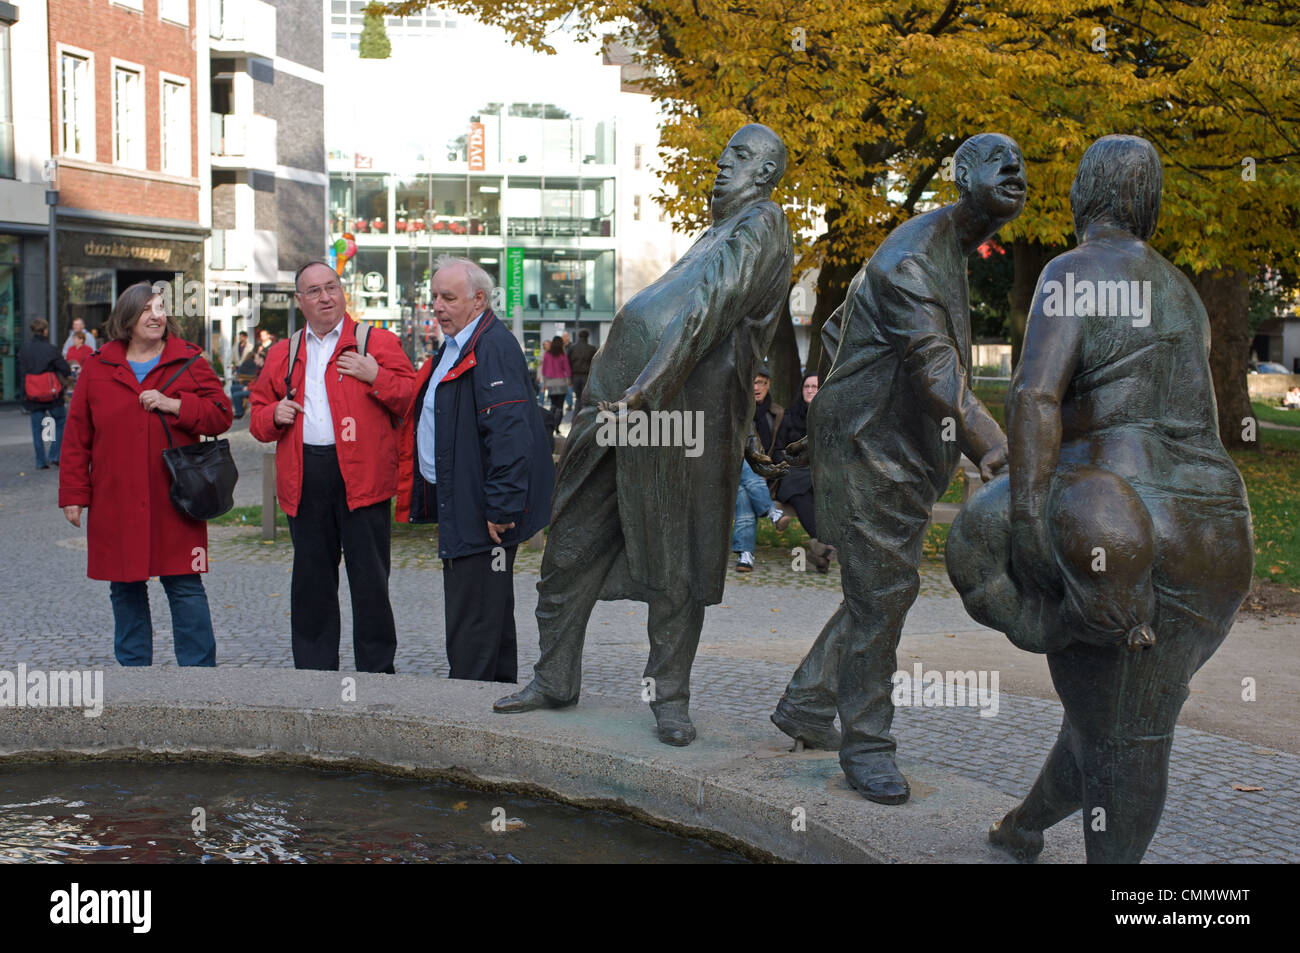 Life-size figure accanto a una fontana, Aachen, Germania. Foto Stock